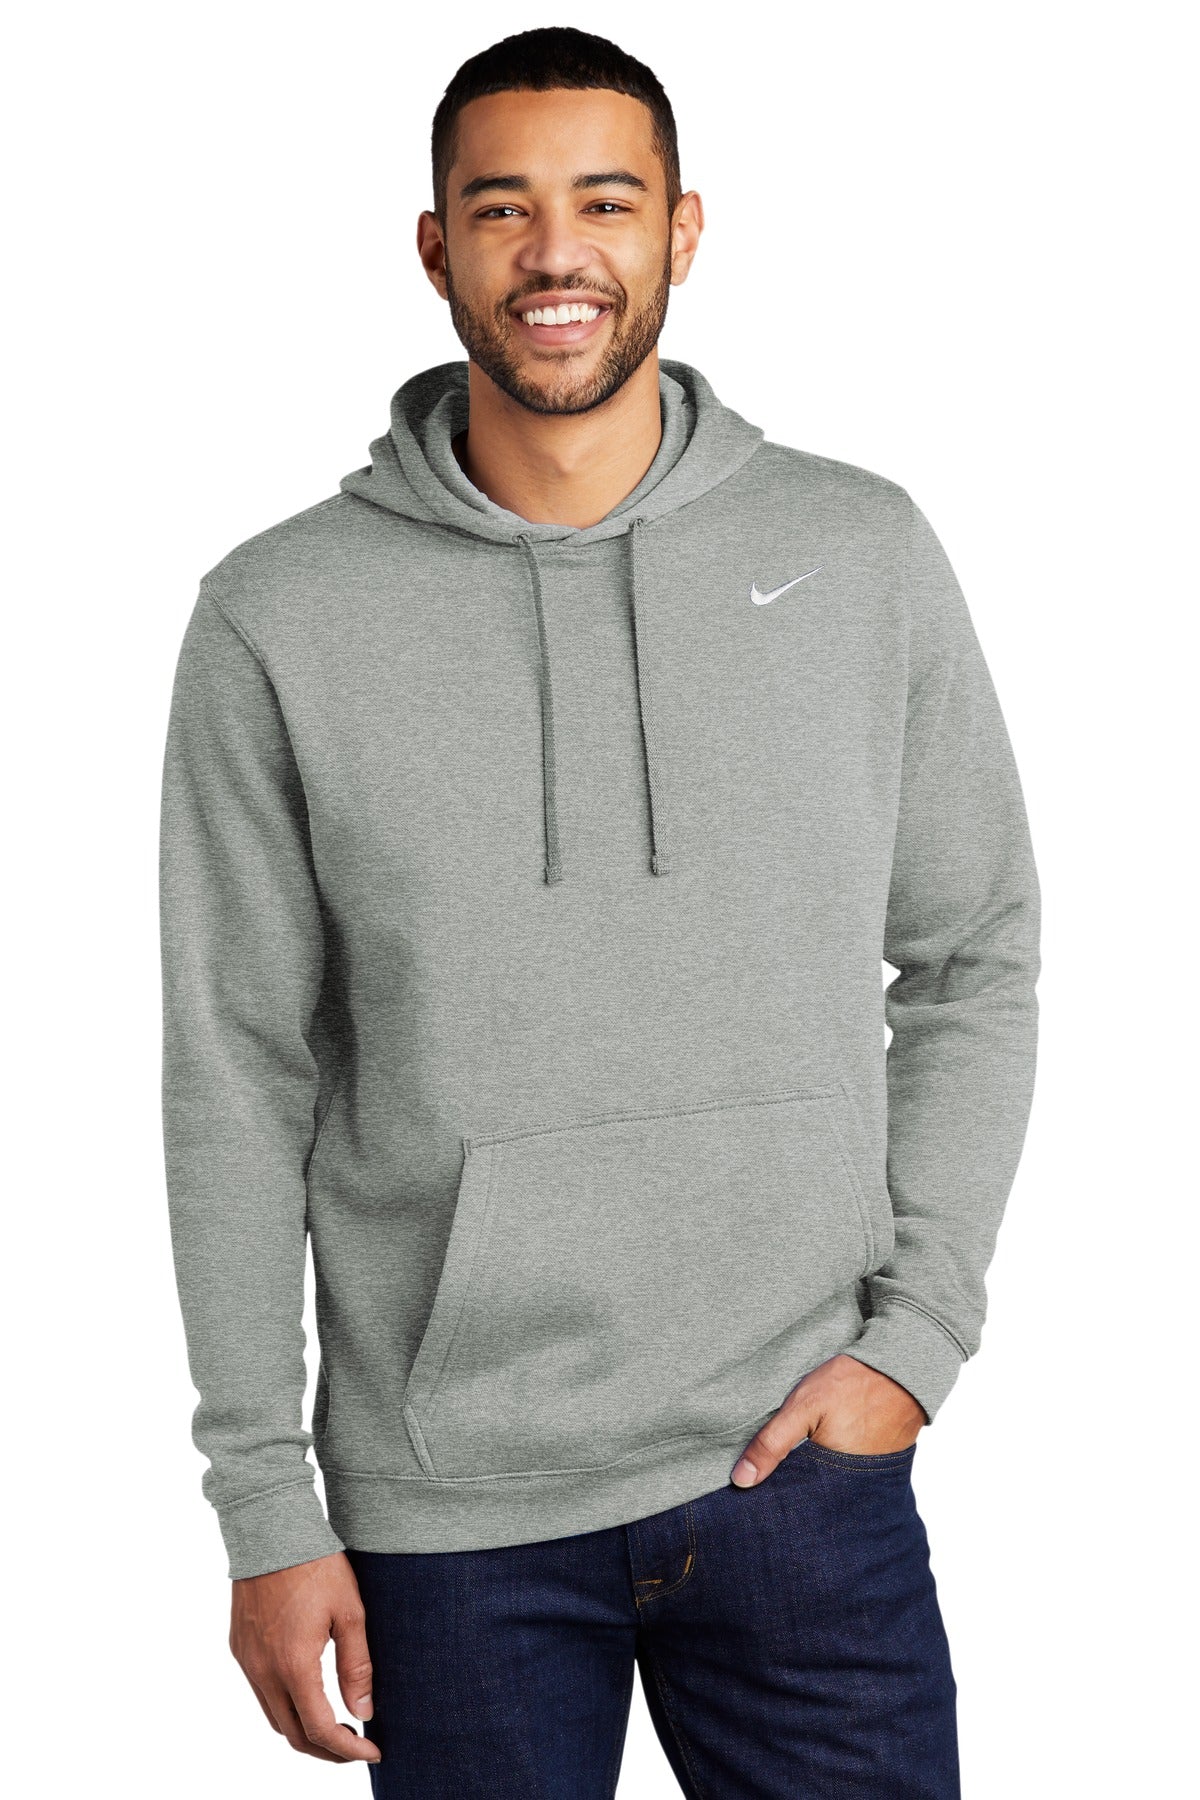 Nike Club Fleece Pullover Hoodie CJ1611